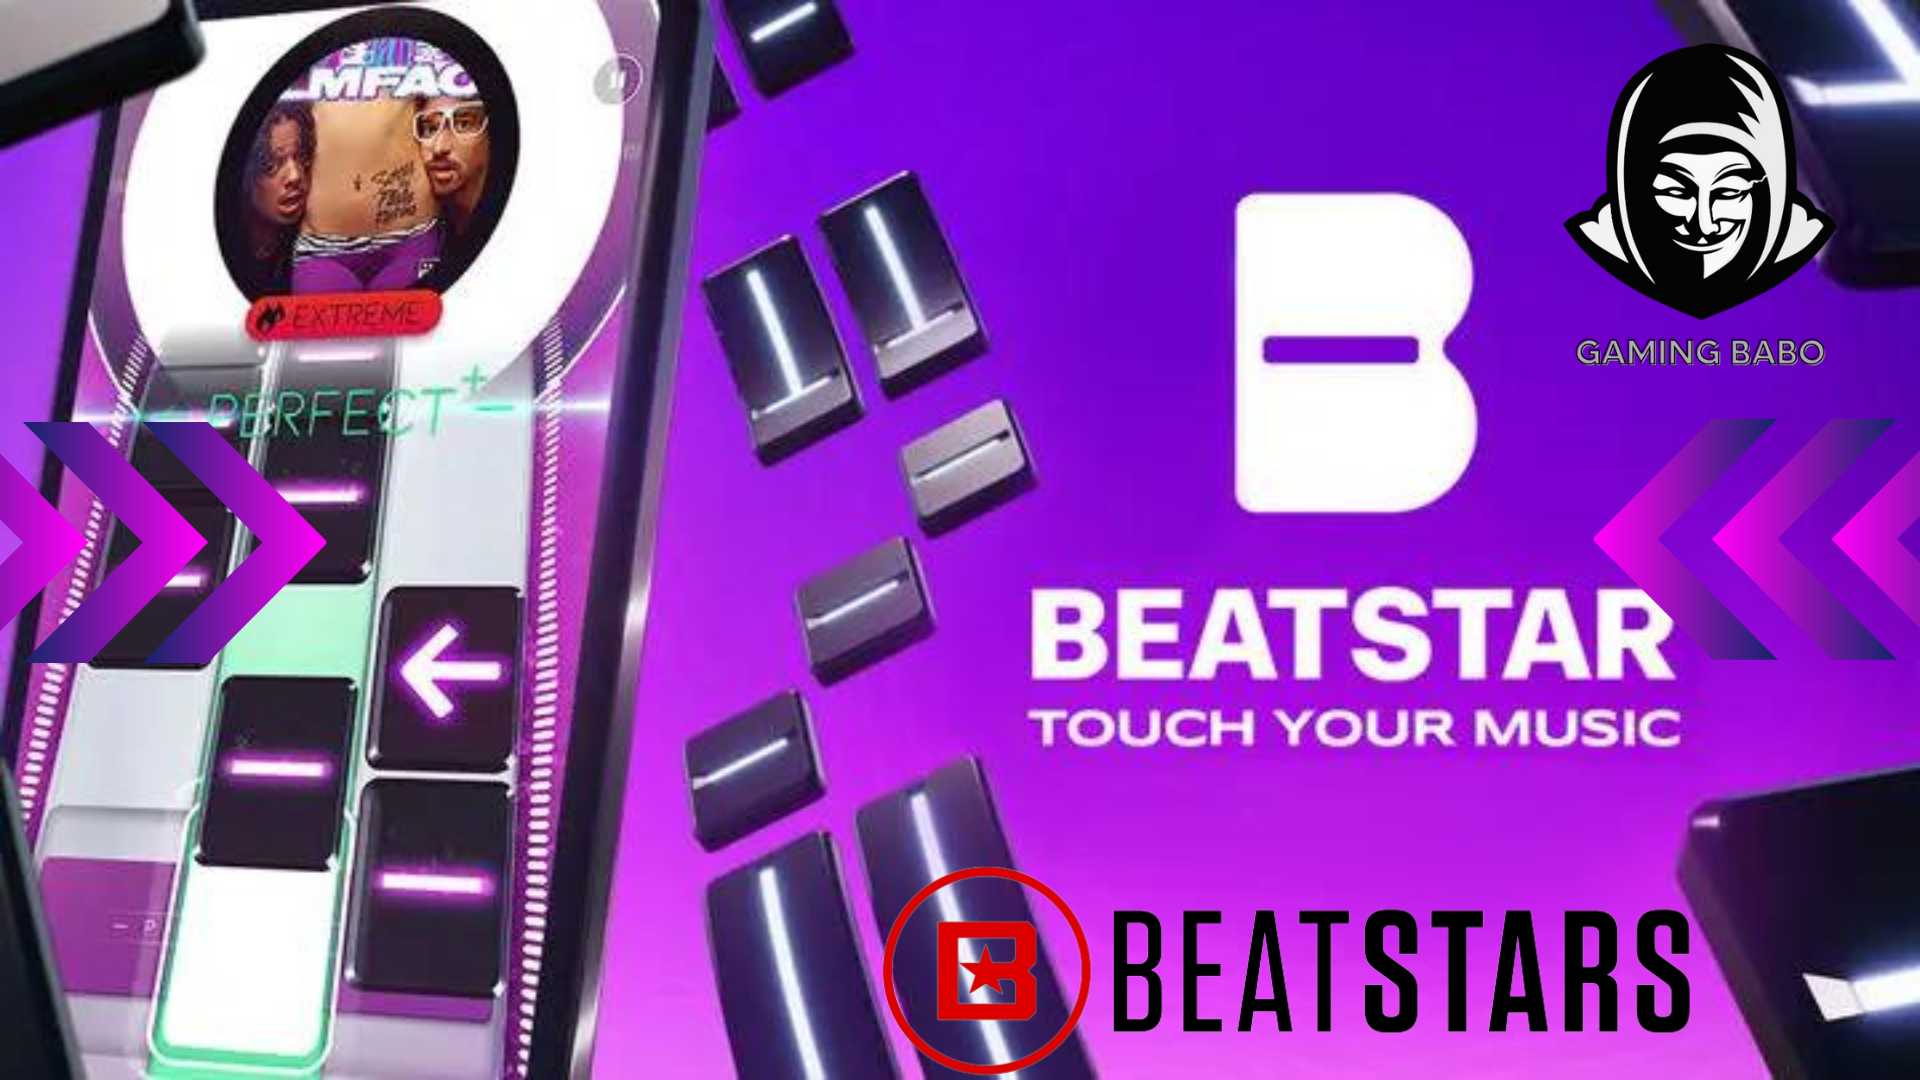 Beatstar tips and tricks